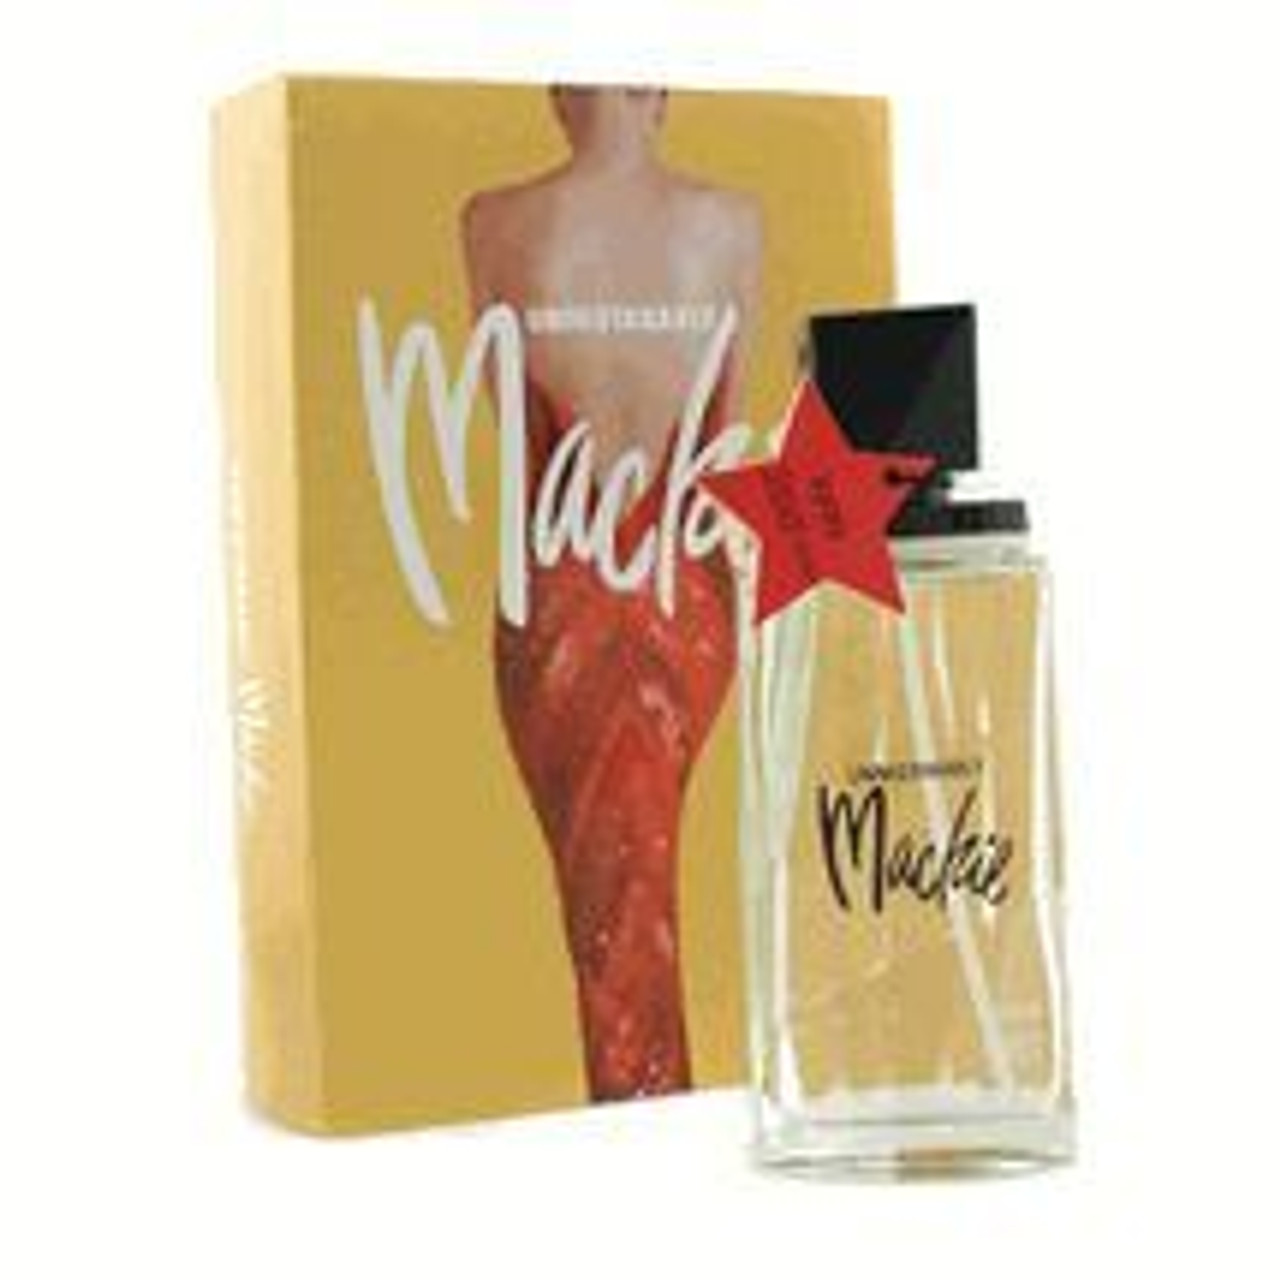 Mackie Perfume by Bob Mackie